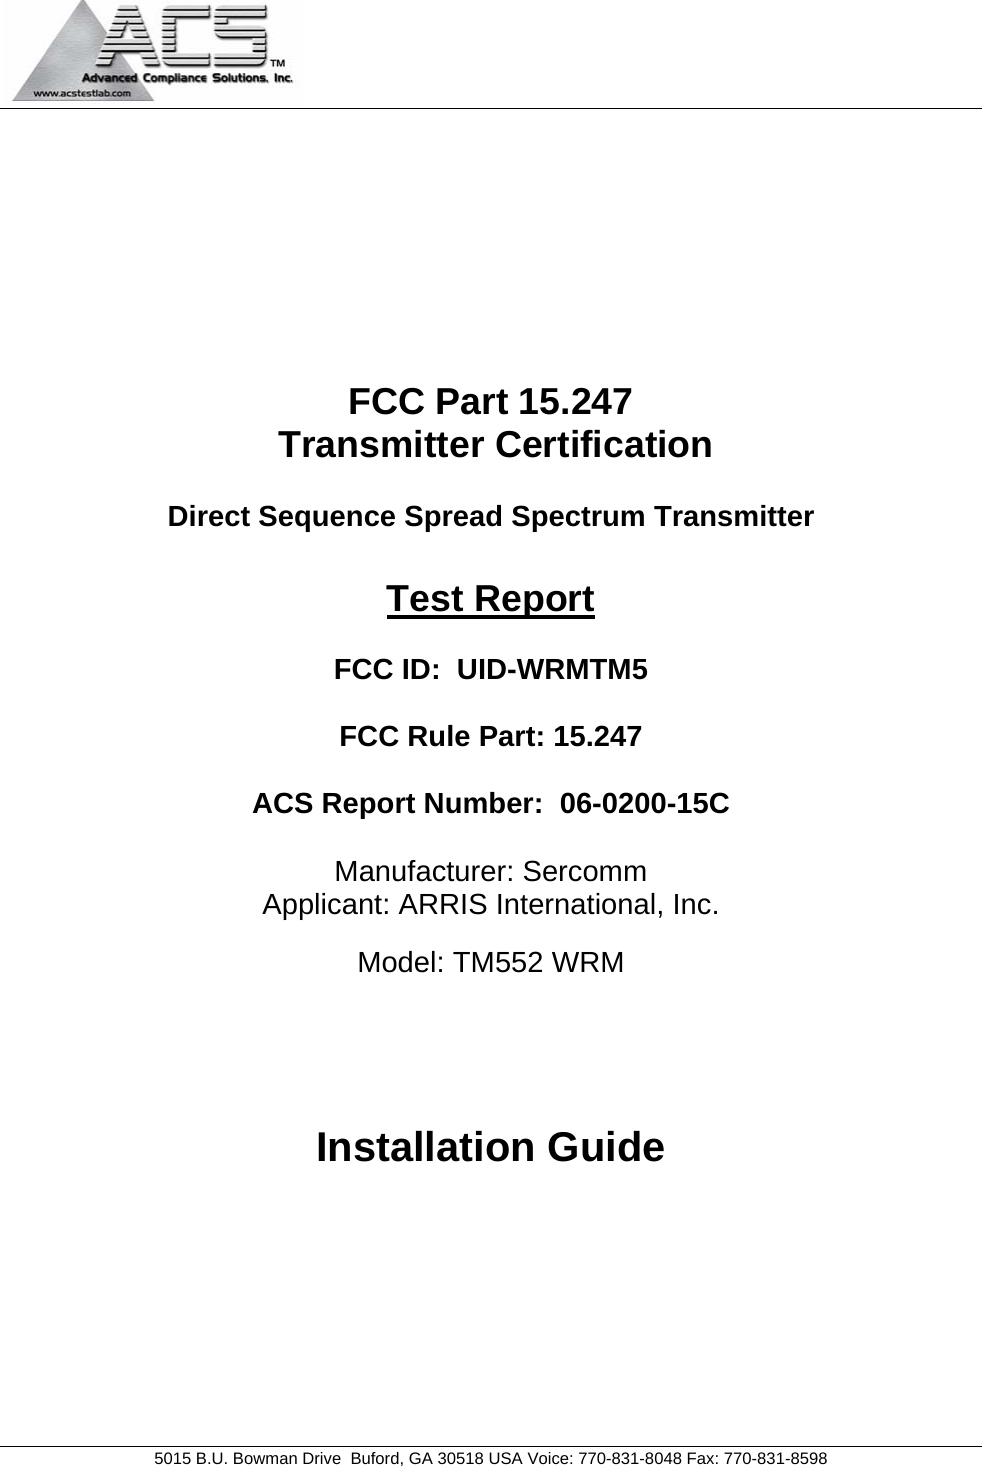   5015 B.U. Bowman Drive  Buford, GA 30518 USA Voice: 770-831-8048 Fax: 770-831-8598   FCC Part 15.247  Transmitter Certification  Direct Sequence Spread Spectrum Transmitter  Test Report  FCC ID:  UID-WRMTM5  FCC Rule Part: 15.247  ACS Report Number:  06-0200-15C   Manufacturer: Sercomm Applicant: ARRIS International, Inc.  Model: TM552 WRM     Installation Guide 